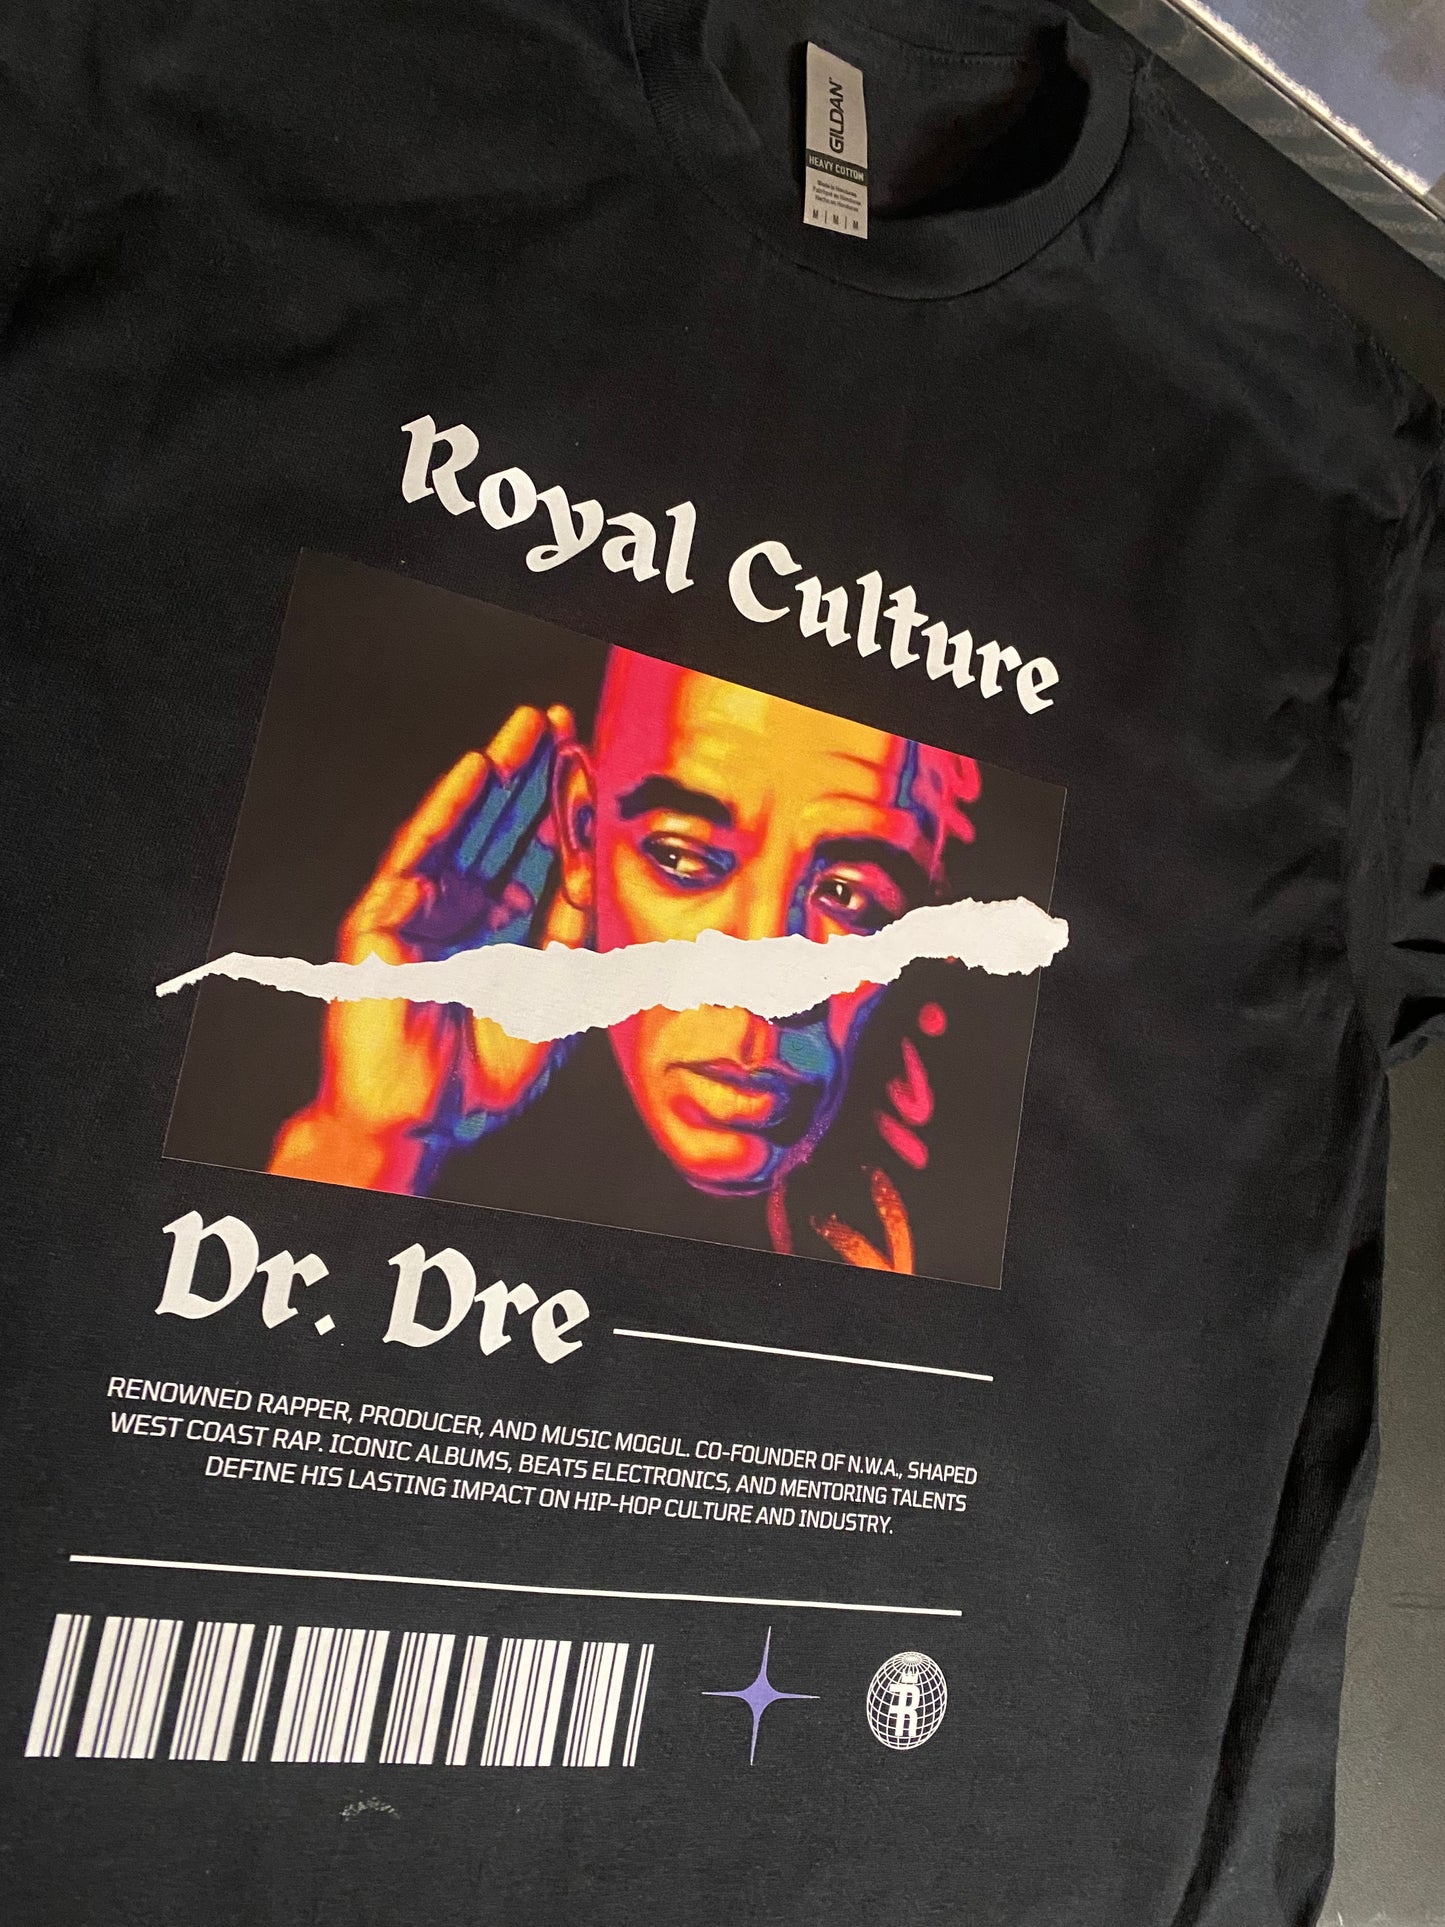 F&R Royal Culture: Dr. Dre